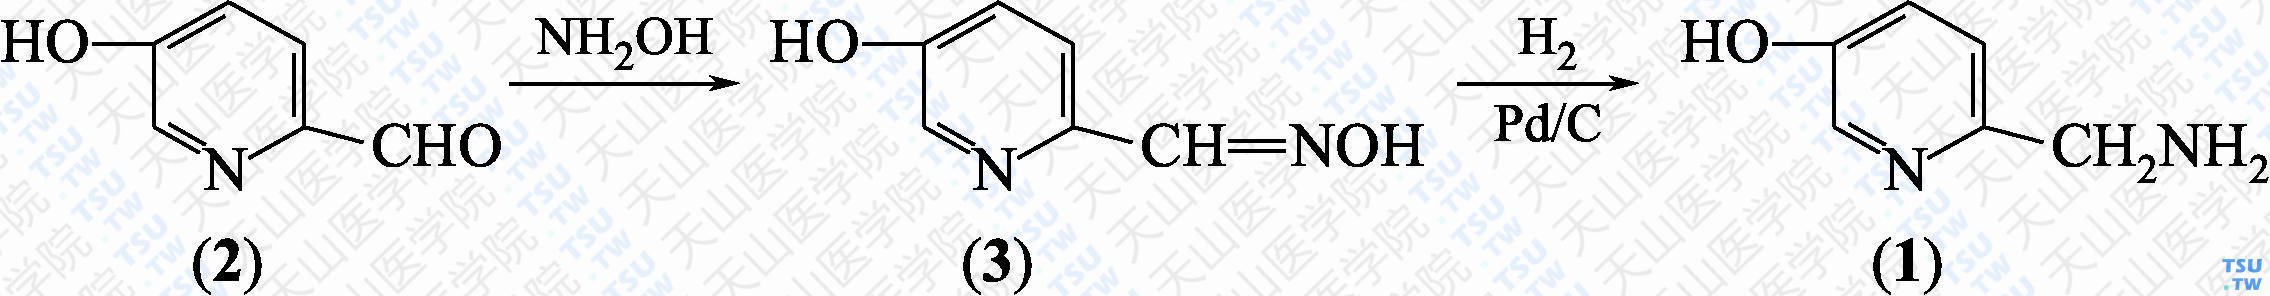 2-氨甲基5-羟基吡啶（分子式：C<sub>6</sub>H<sub>8</sub>N<sub>2</sub>O）的合成方法路线及其结构式